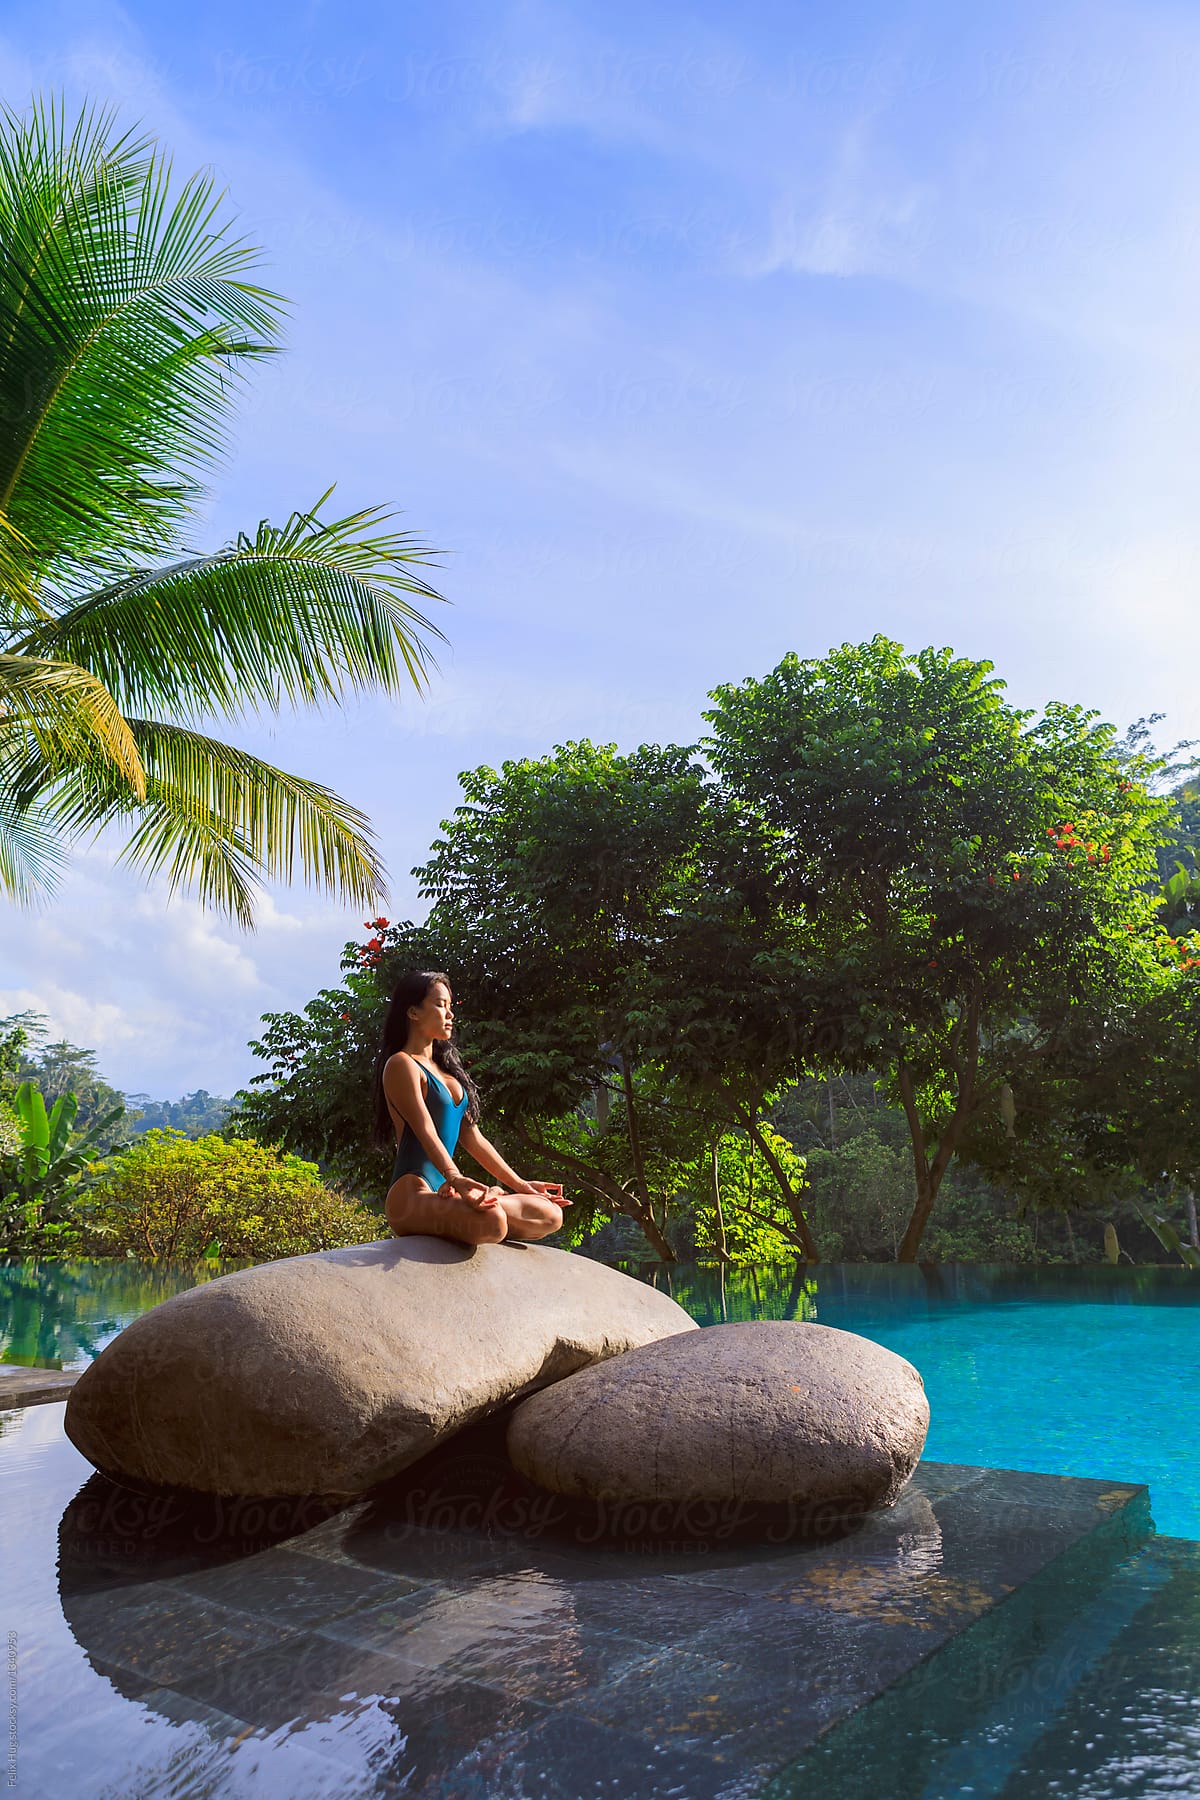 Yoga by a tropical pool setting.